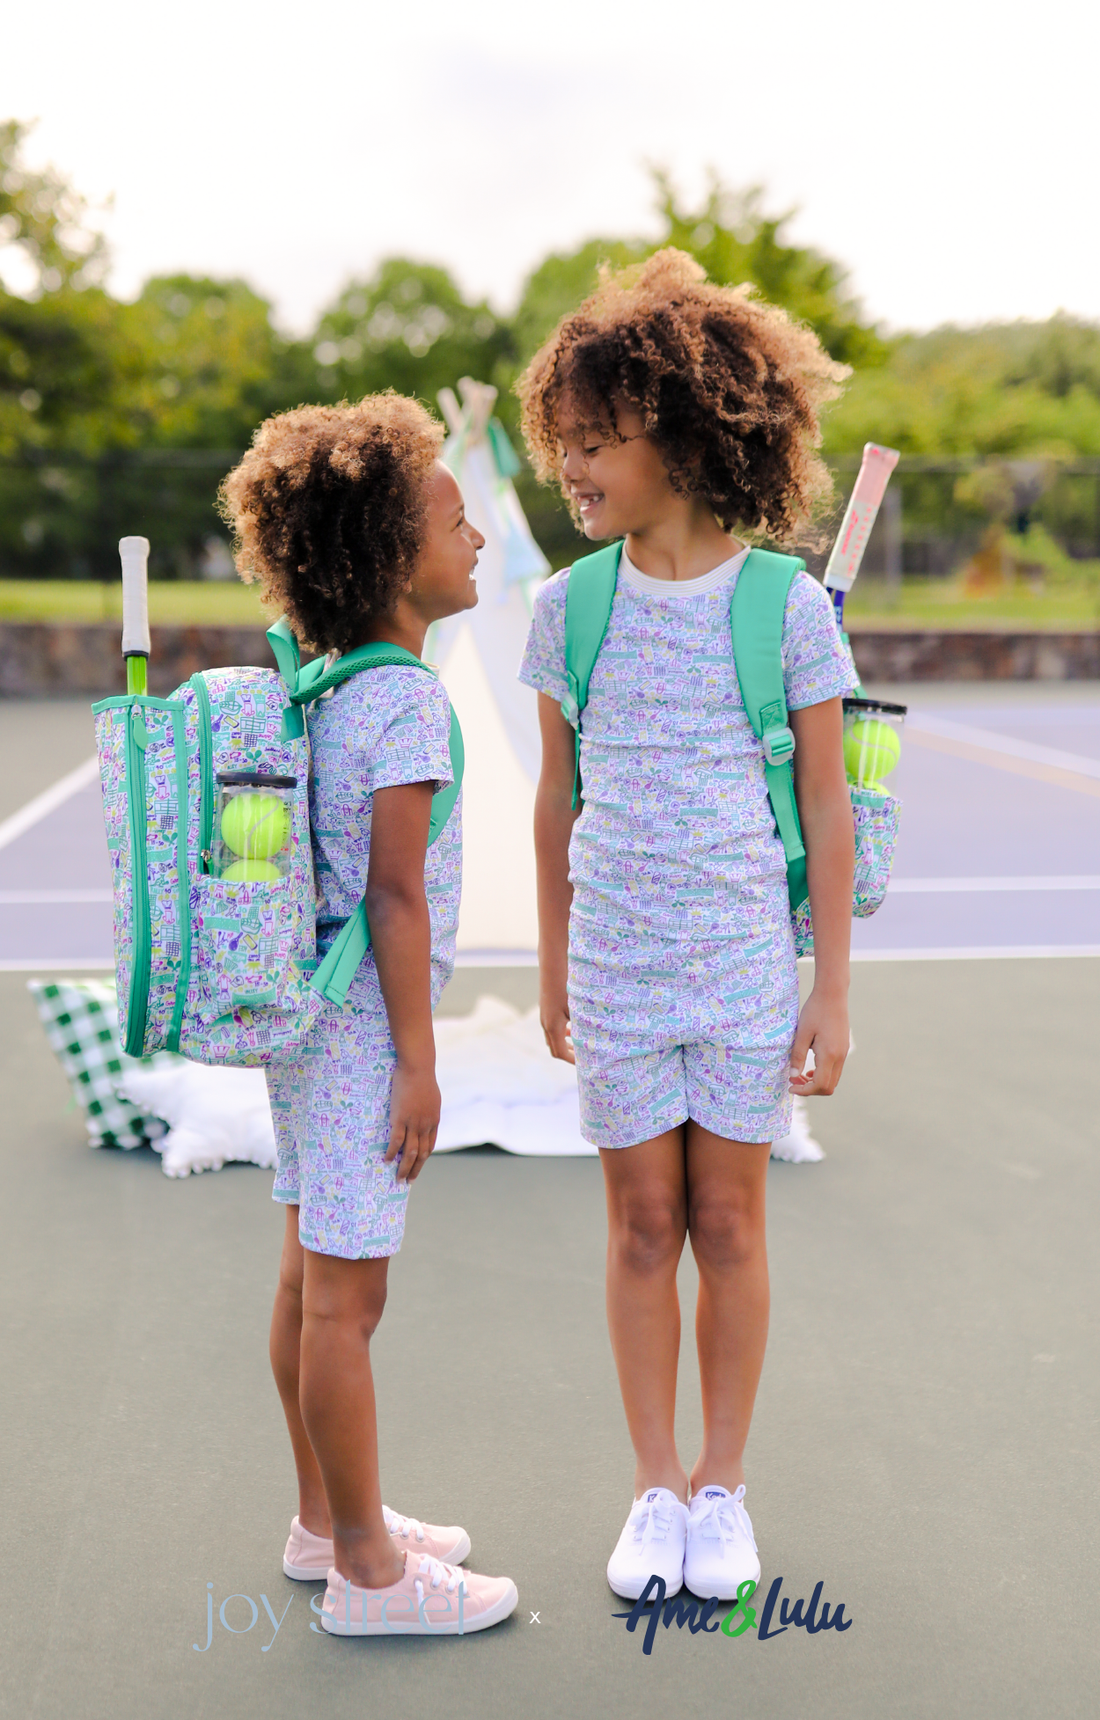 Ame & Lulu x Joy Street Kids Tennis Bag